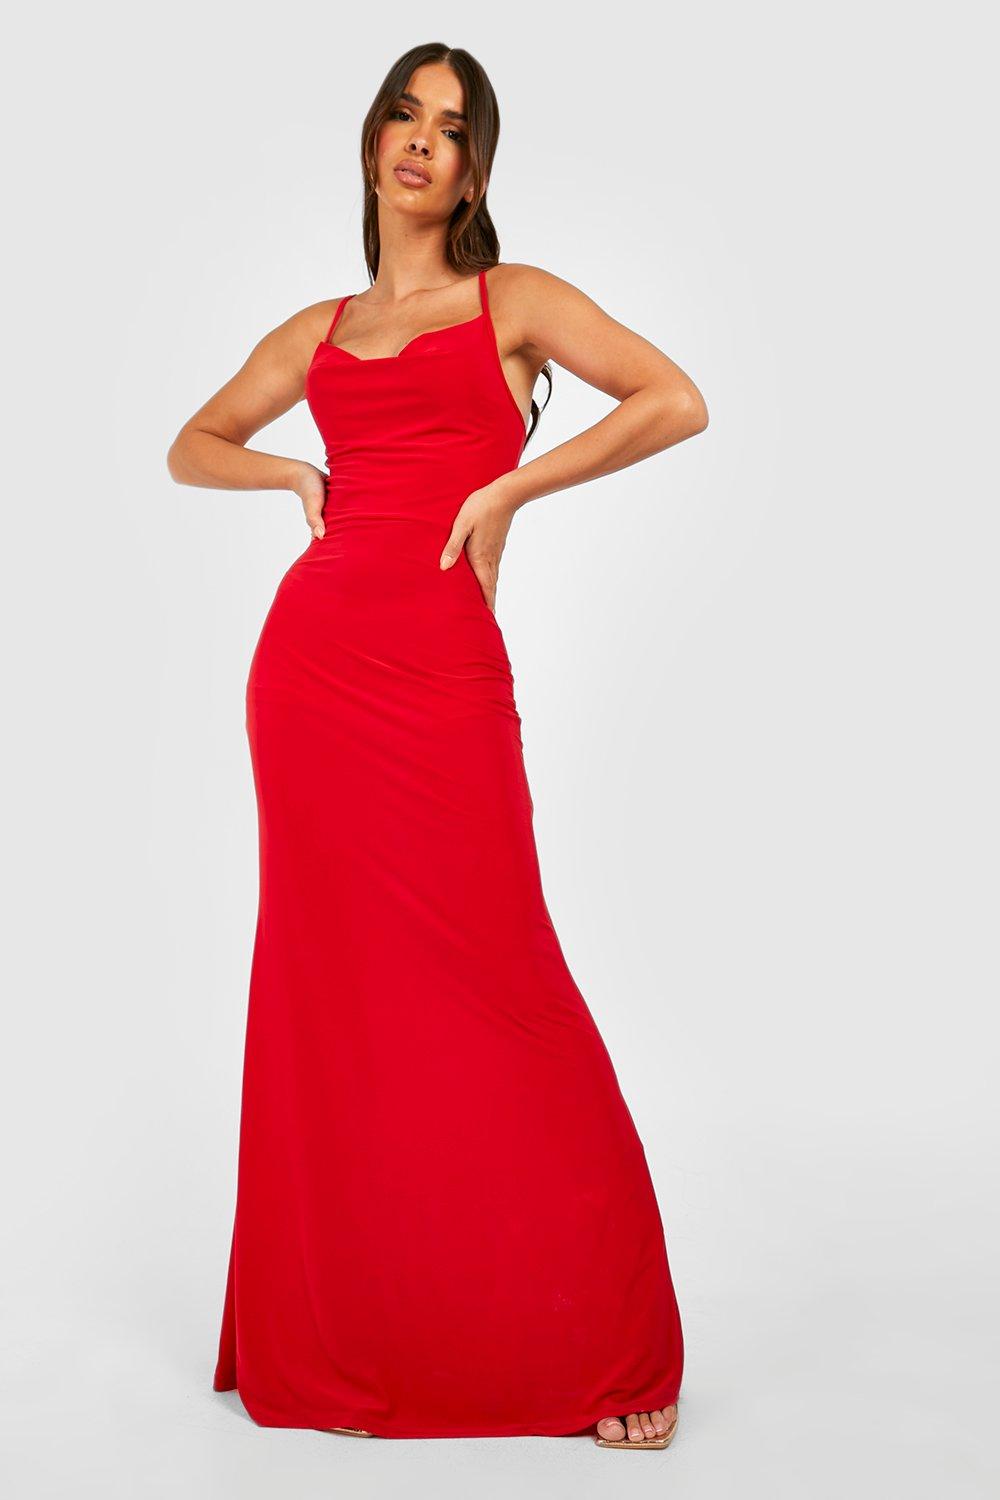 boohoo red dress